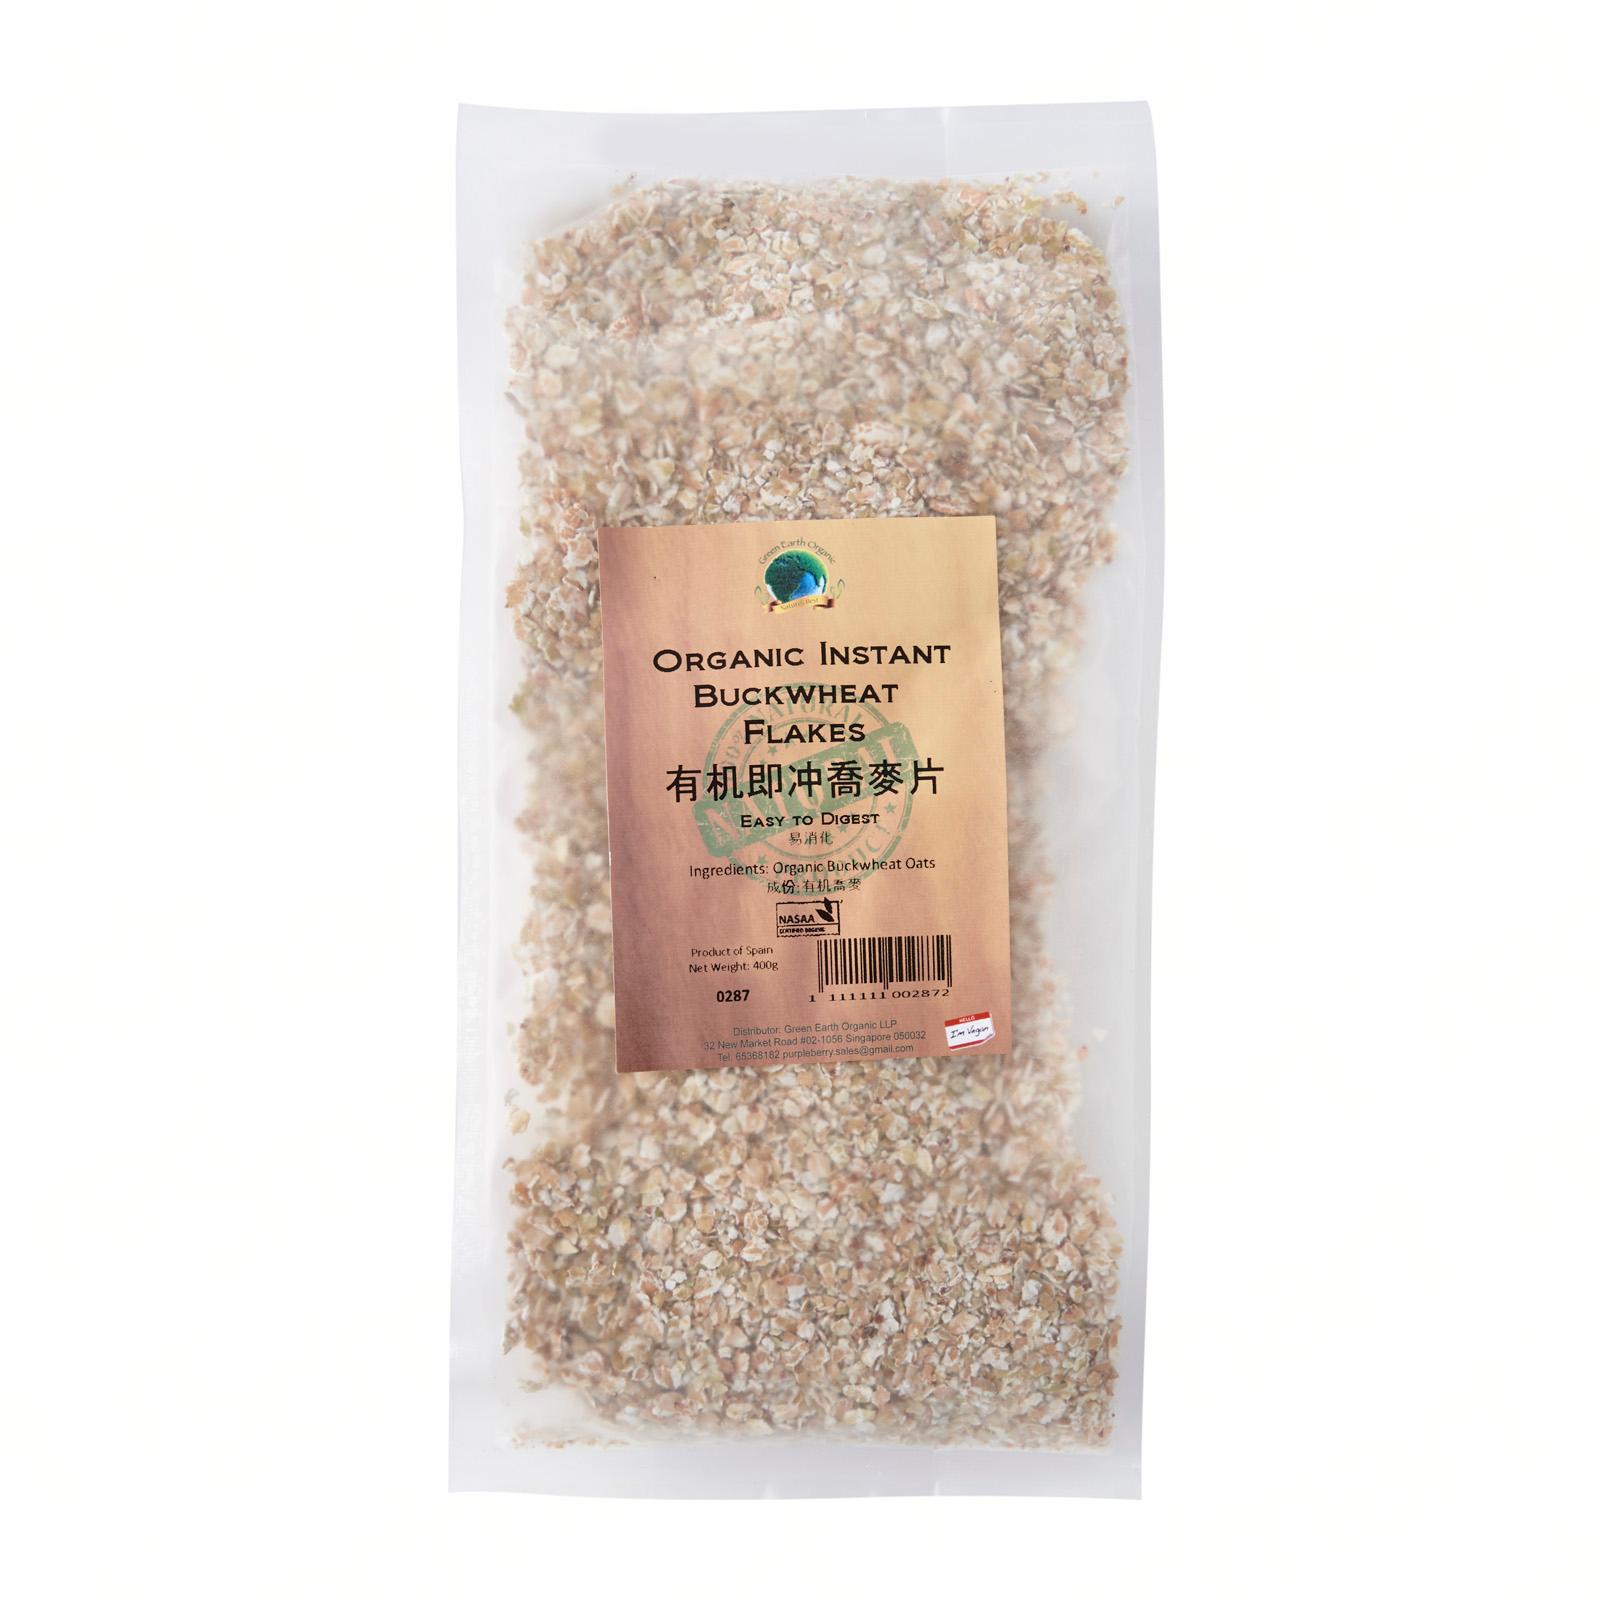 Organic Instant Buckwheat Flake